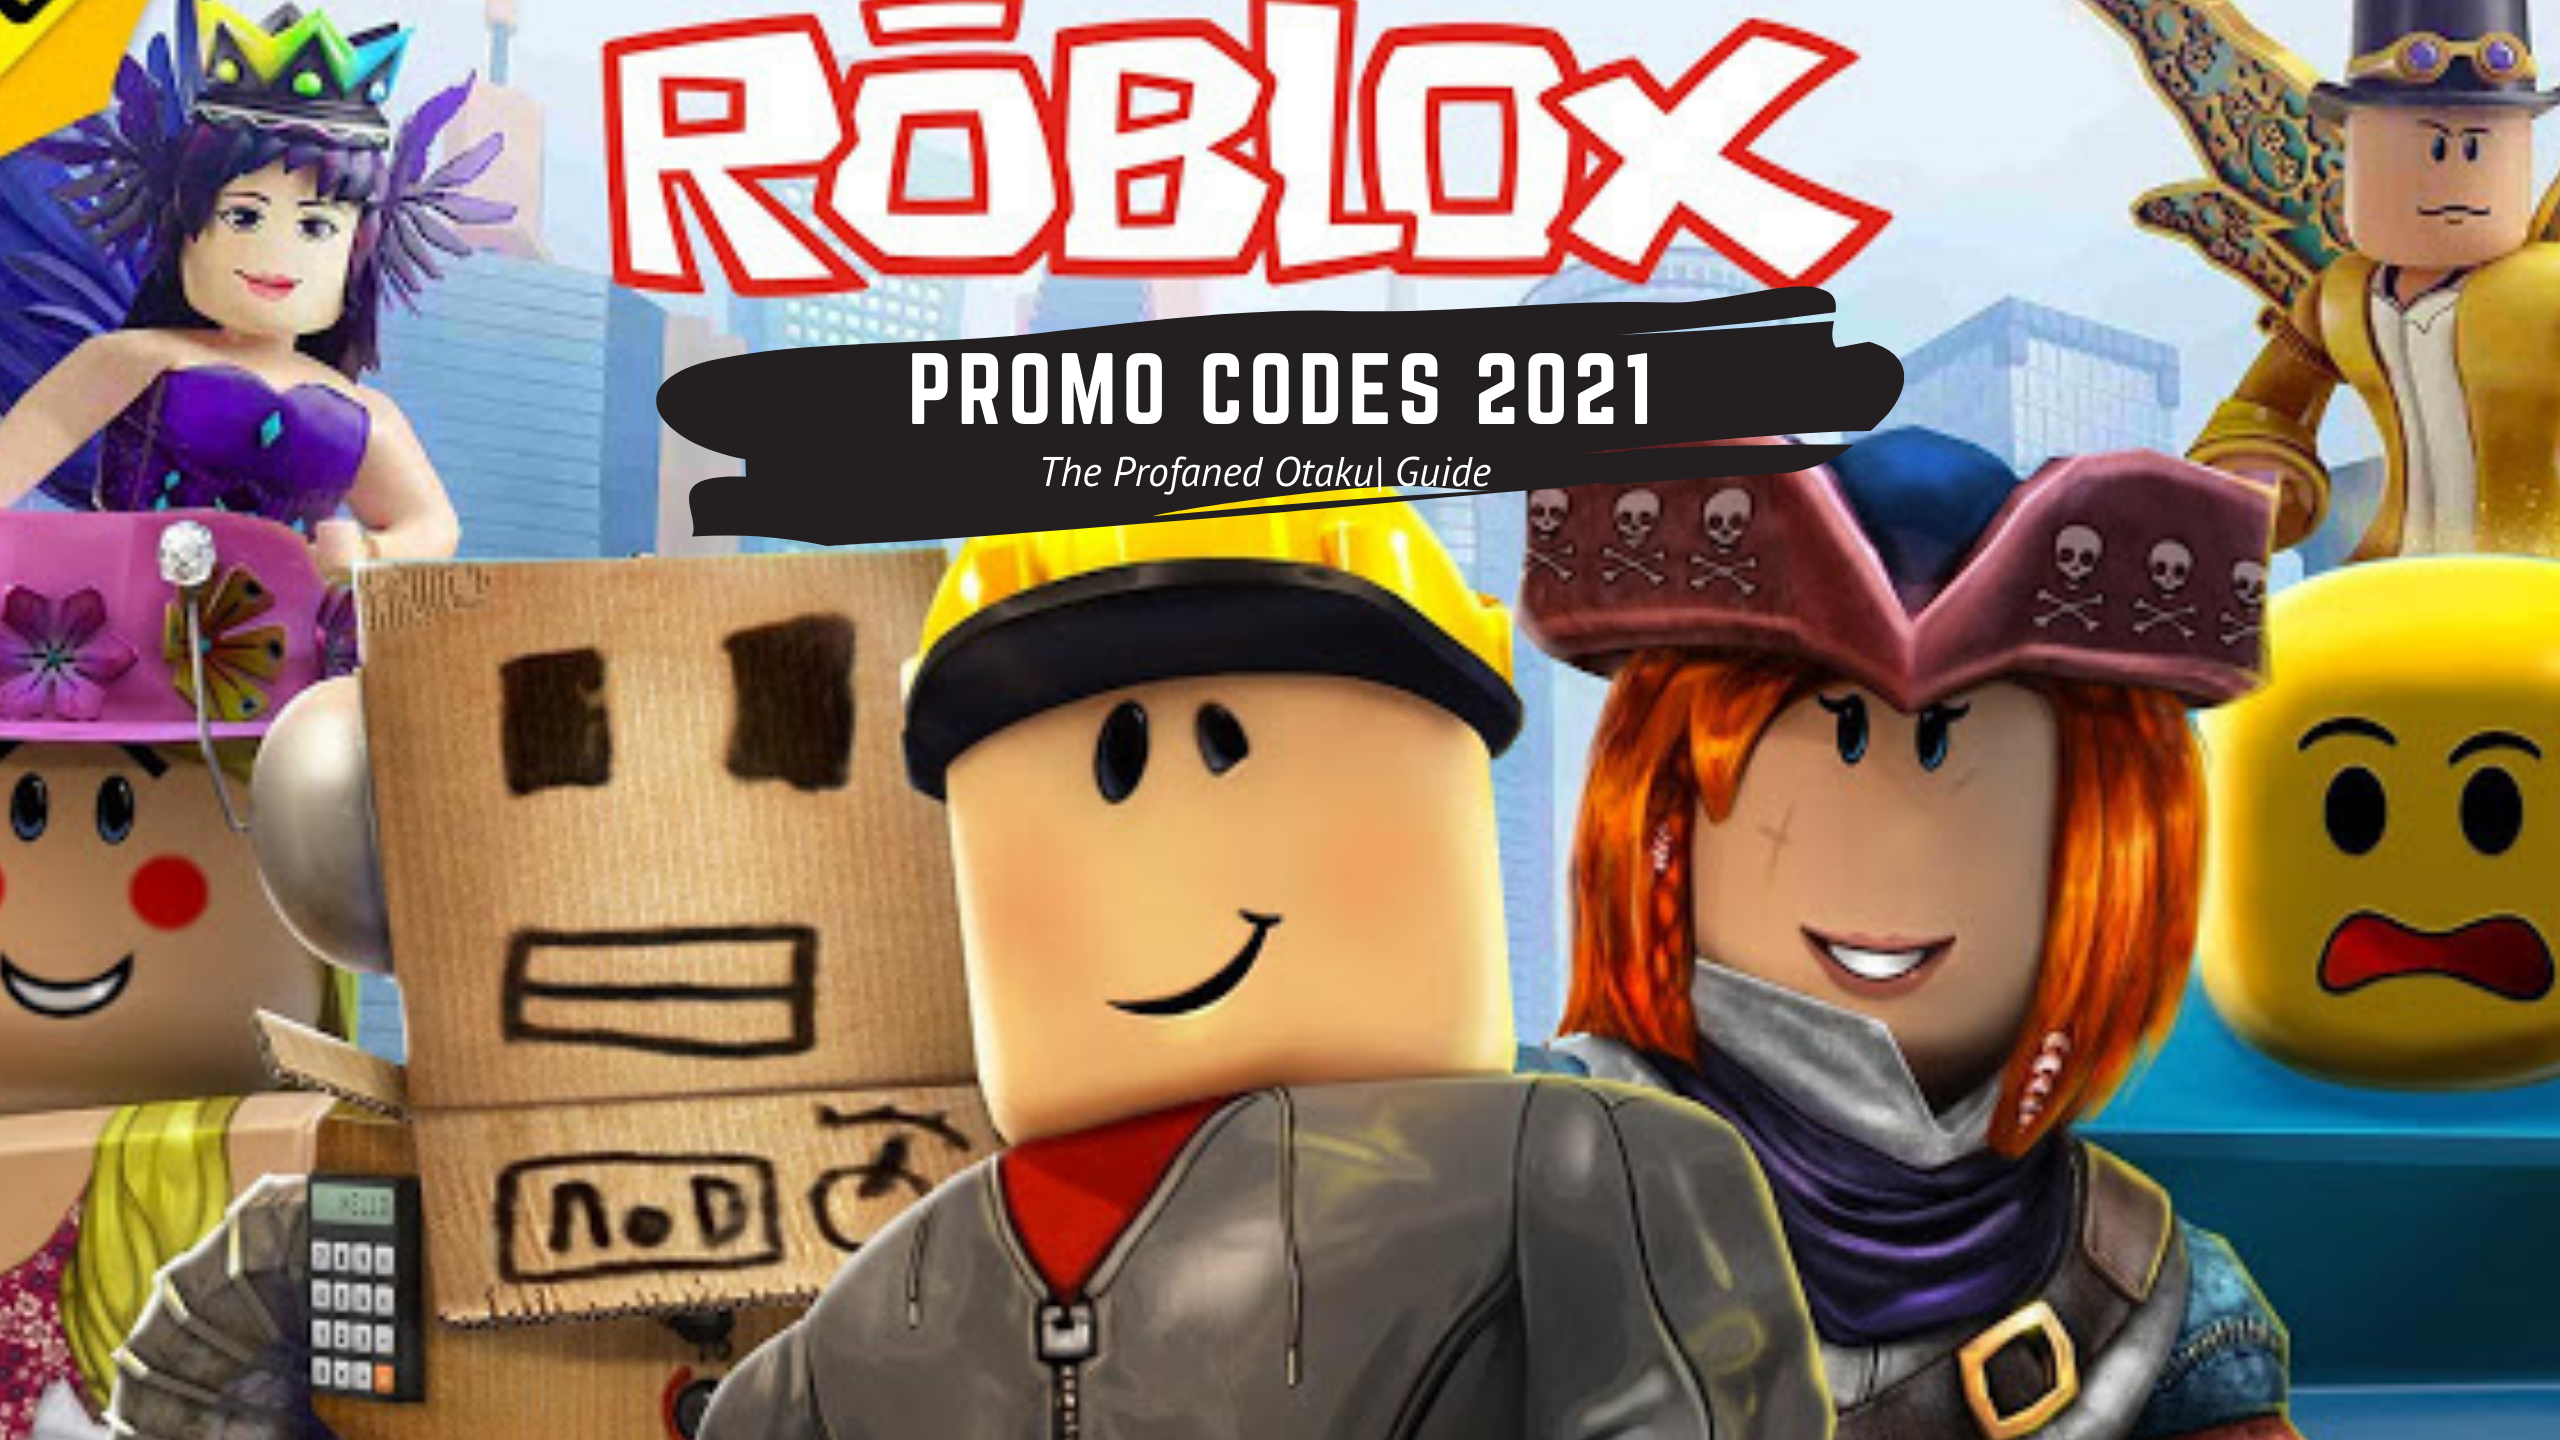 Roblox Promo Codes 2021 The Profaned Otaku - roblox twitter bird code 2021